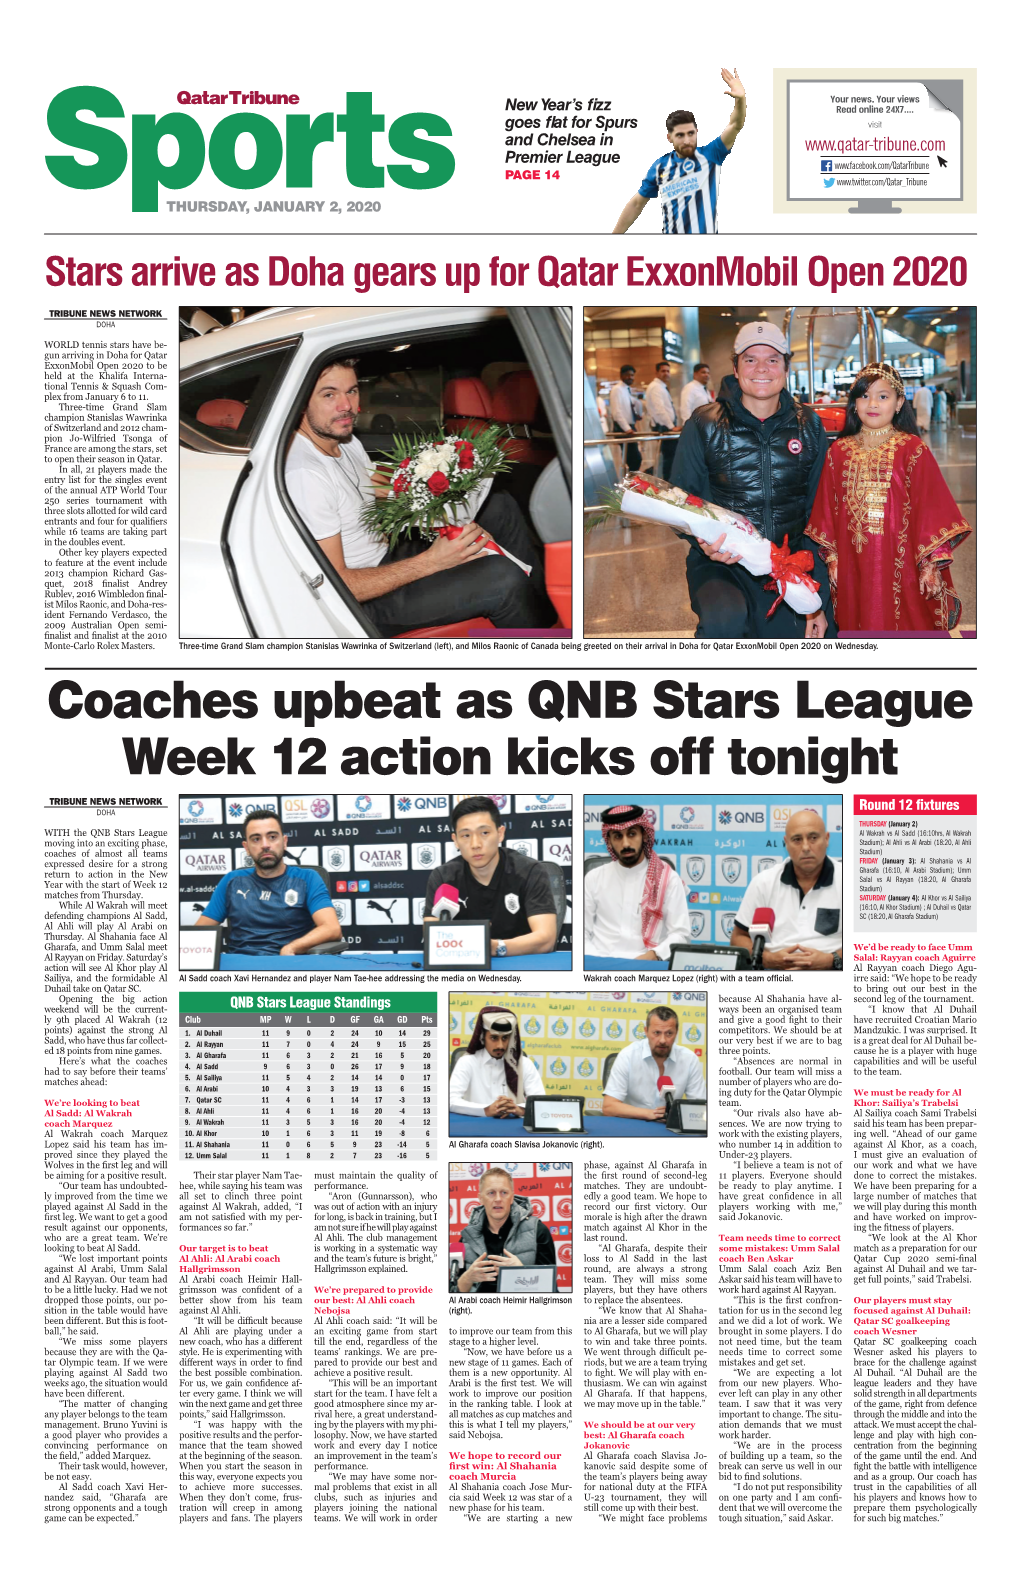 Coaches Upbeat As QNB Stars League Week 12 Action Kicks Off Tonight